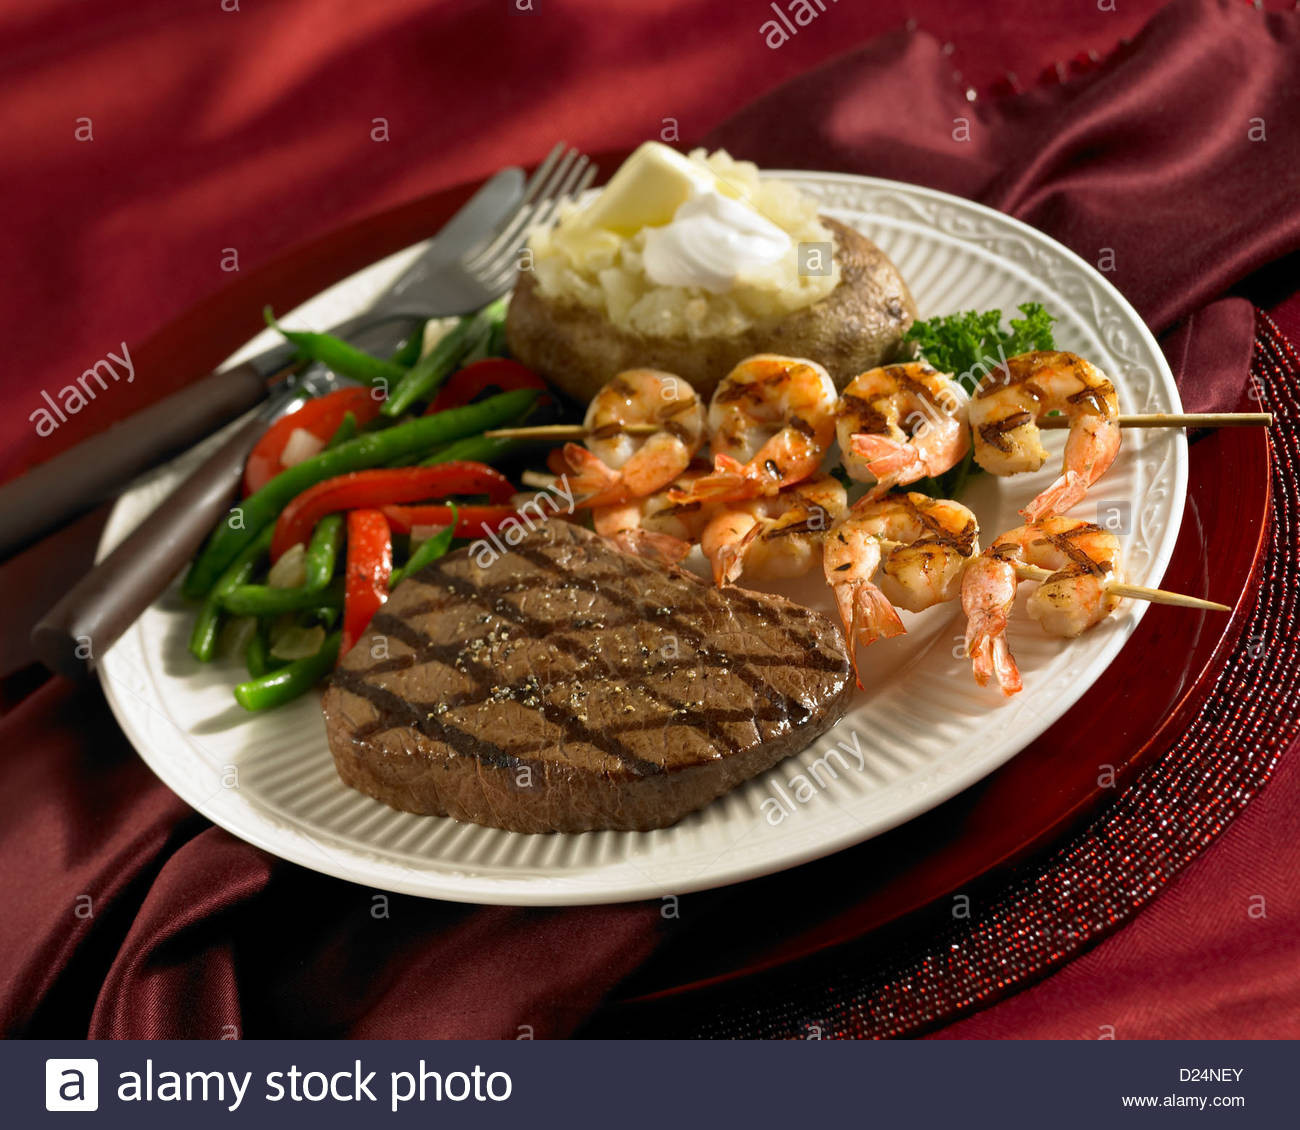 Steak And Shrimp Dinners
 Steak and shrimp skewer dinner with loaded baked potato